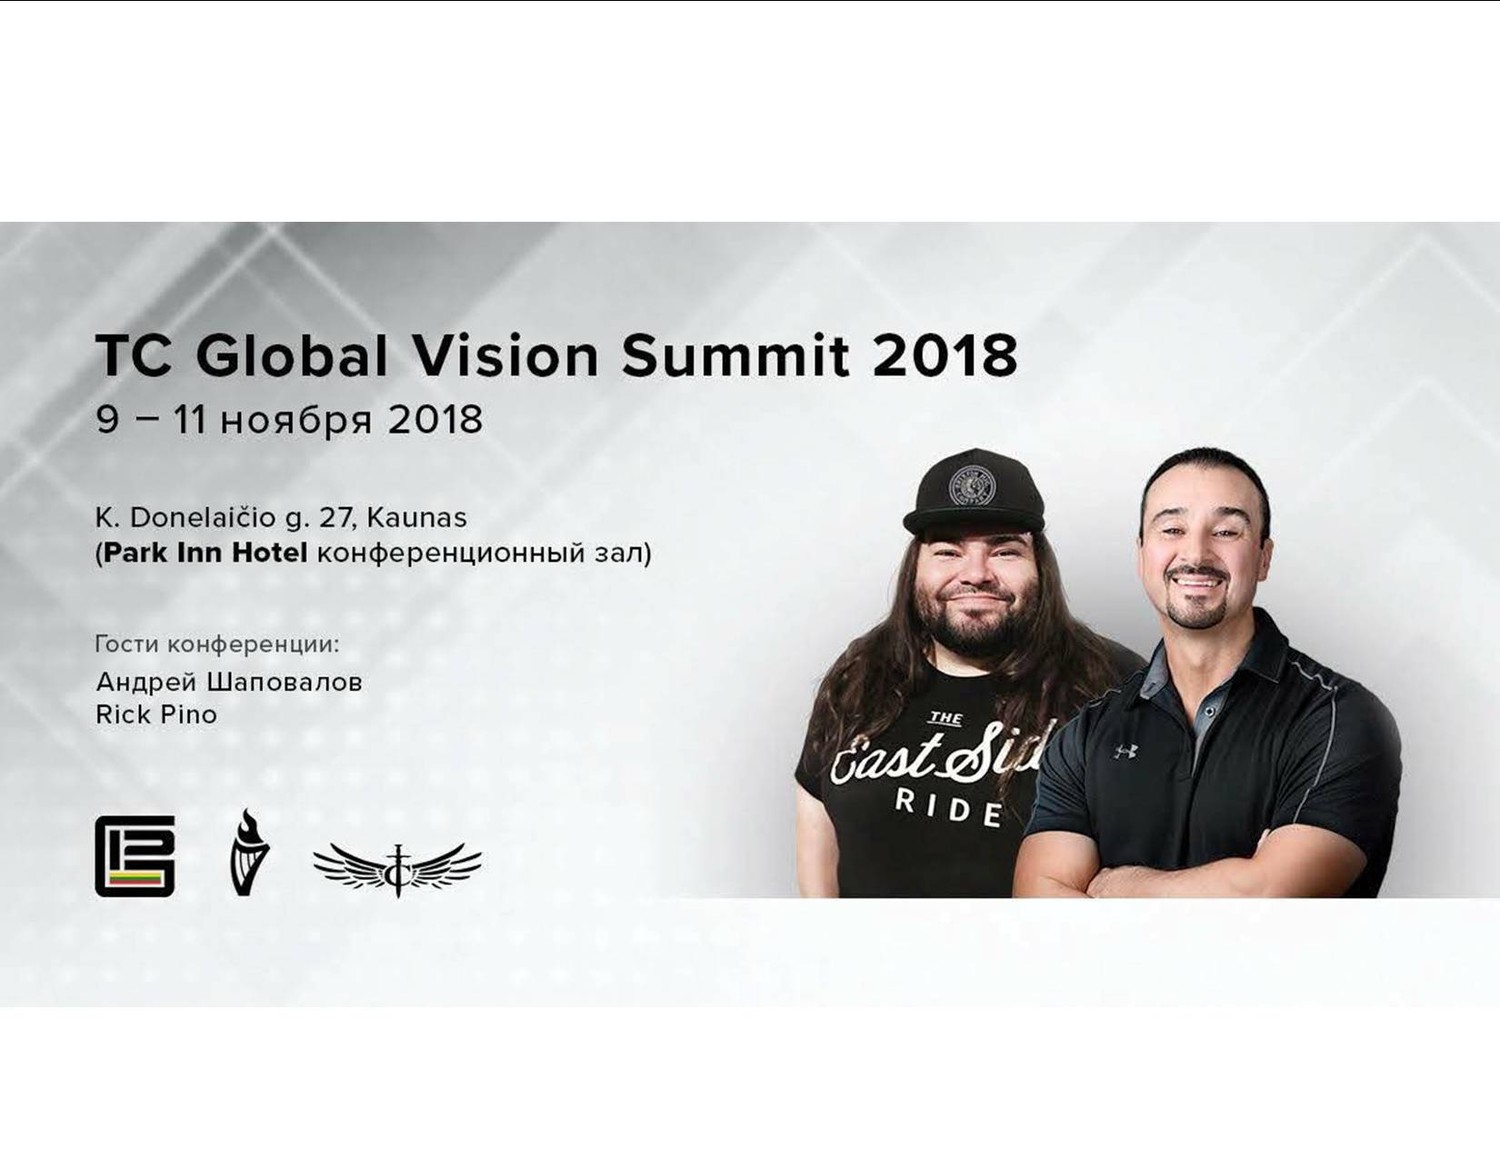 TC Global Vision Summit 2018 с участием Андрея Шаповалова и Рика Пино (Ноябрь 9-11 2018)